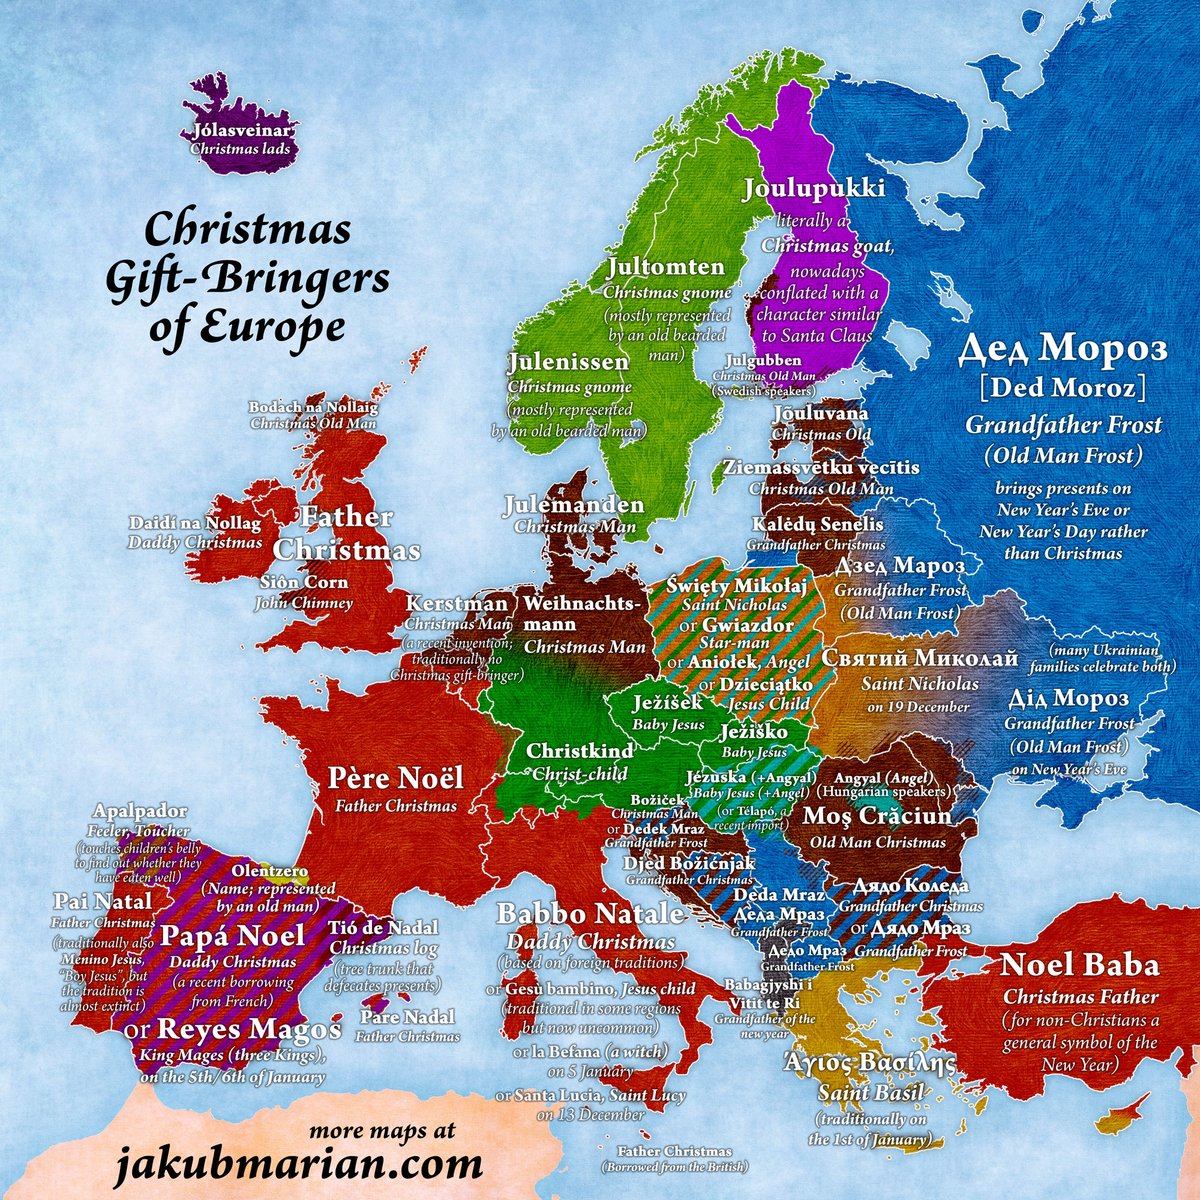 "Santa" all around the world.